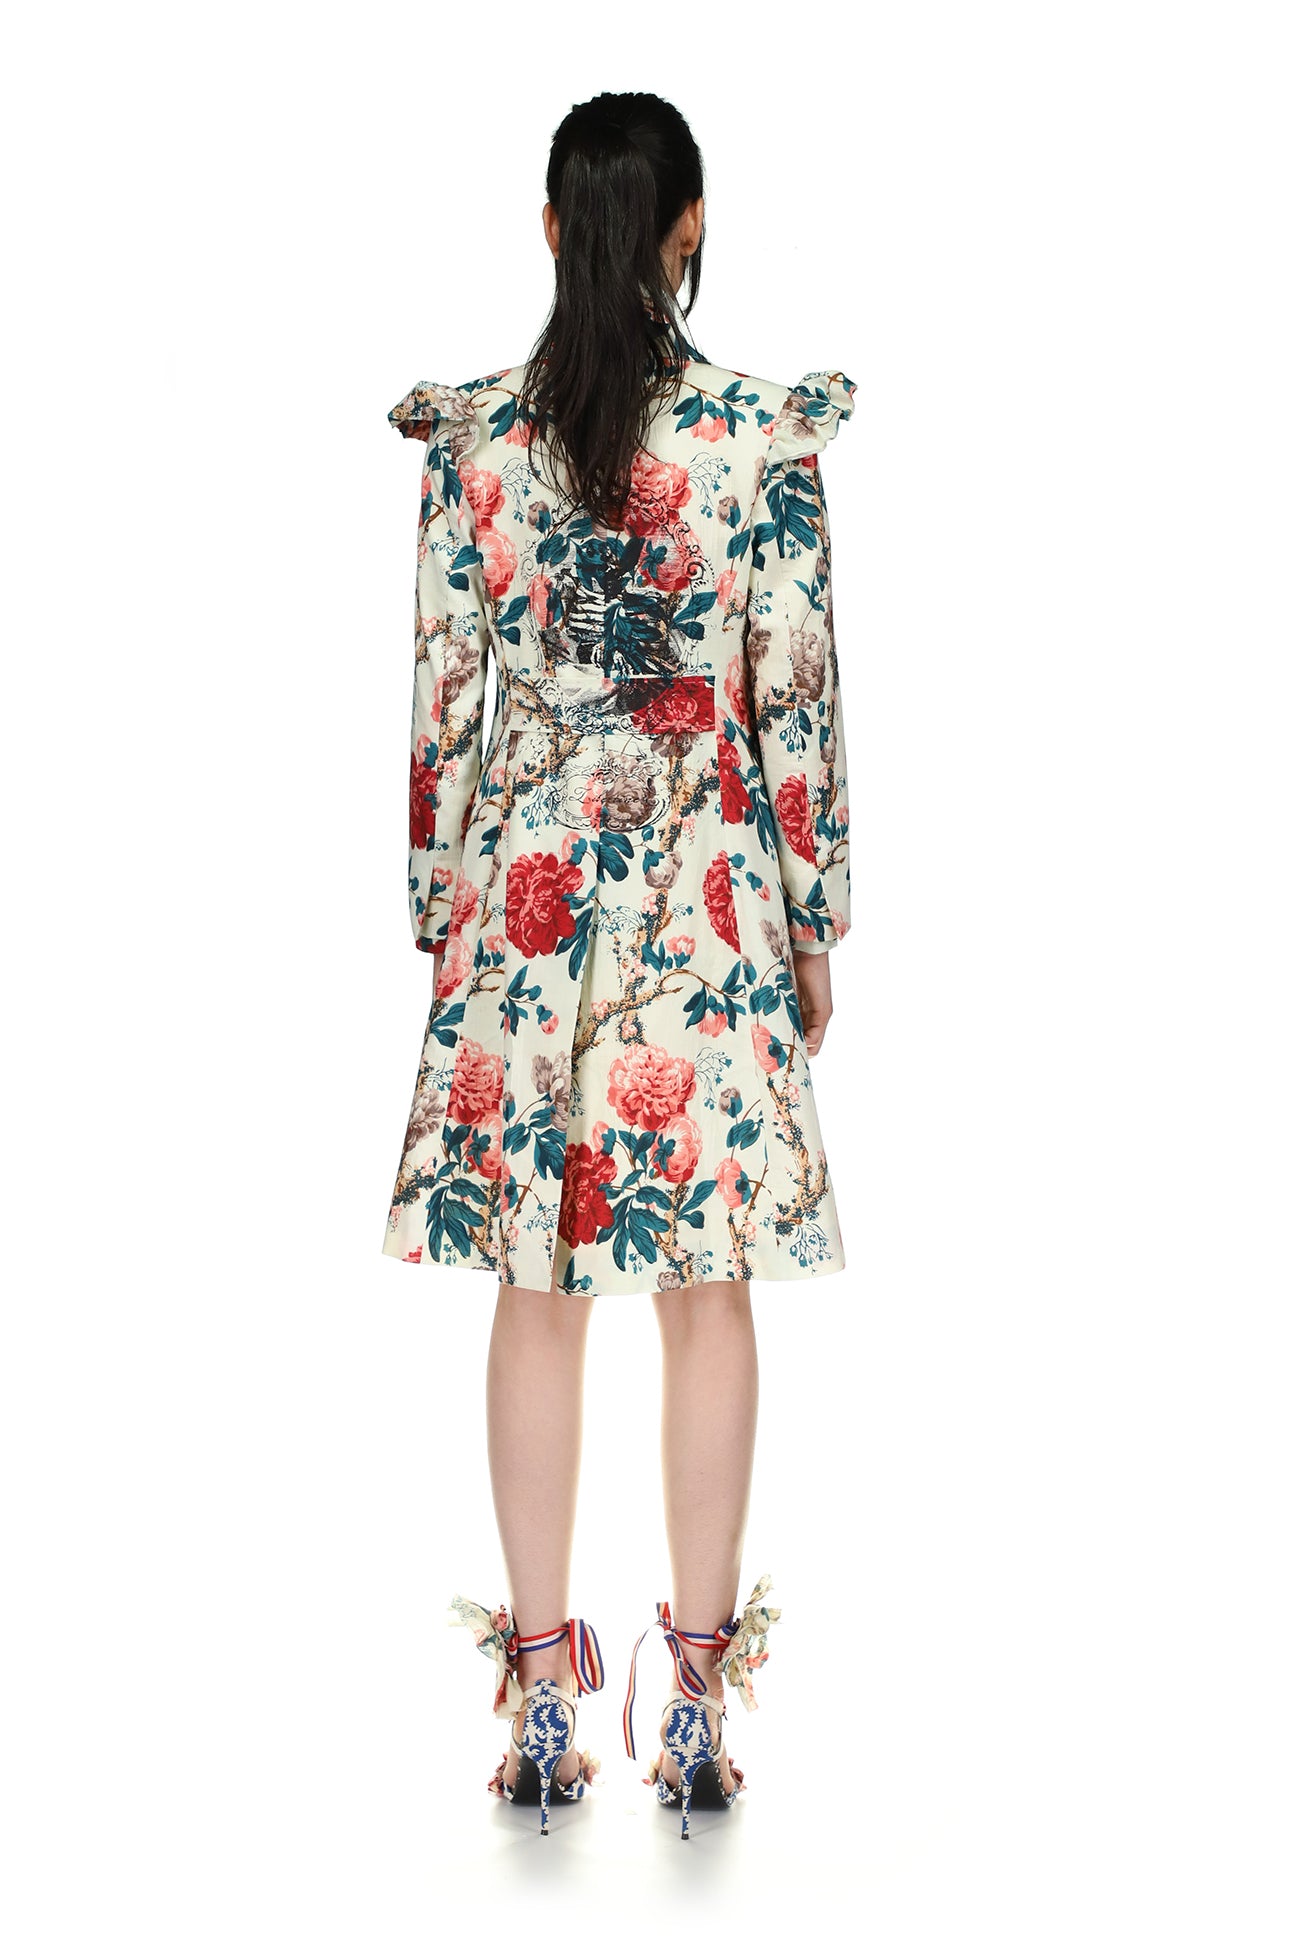 Silk Screen Mélange 'Kandi Floral' Ruffle Cap Coat - Women's Jackets & Coats - Libertine